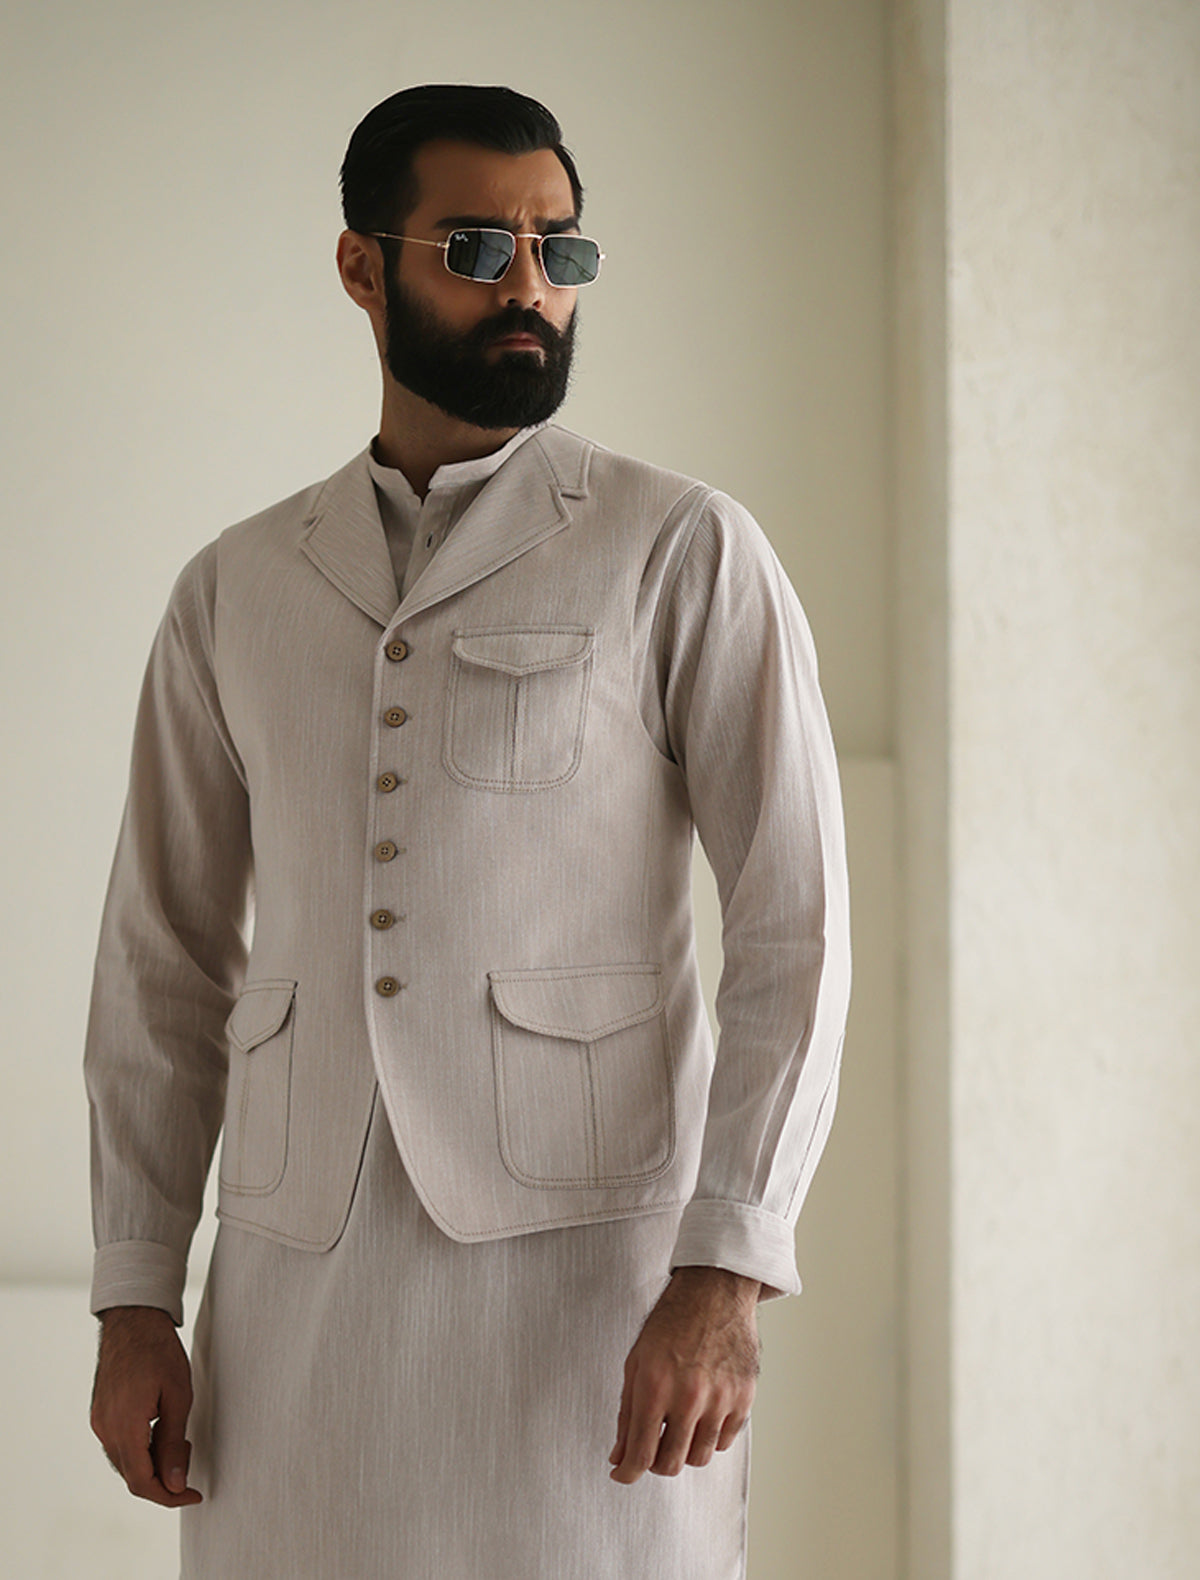 Pakistani Menswear | Ismail Farid - LIGHT BEIGE WAISTCOAT - Khanumjan  Pakistani Clothes and Designer Dresses in UK, USA 